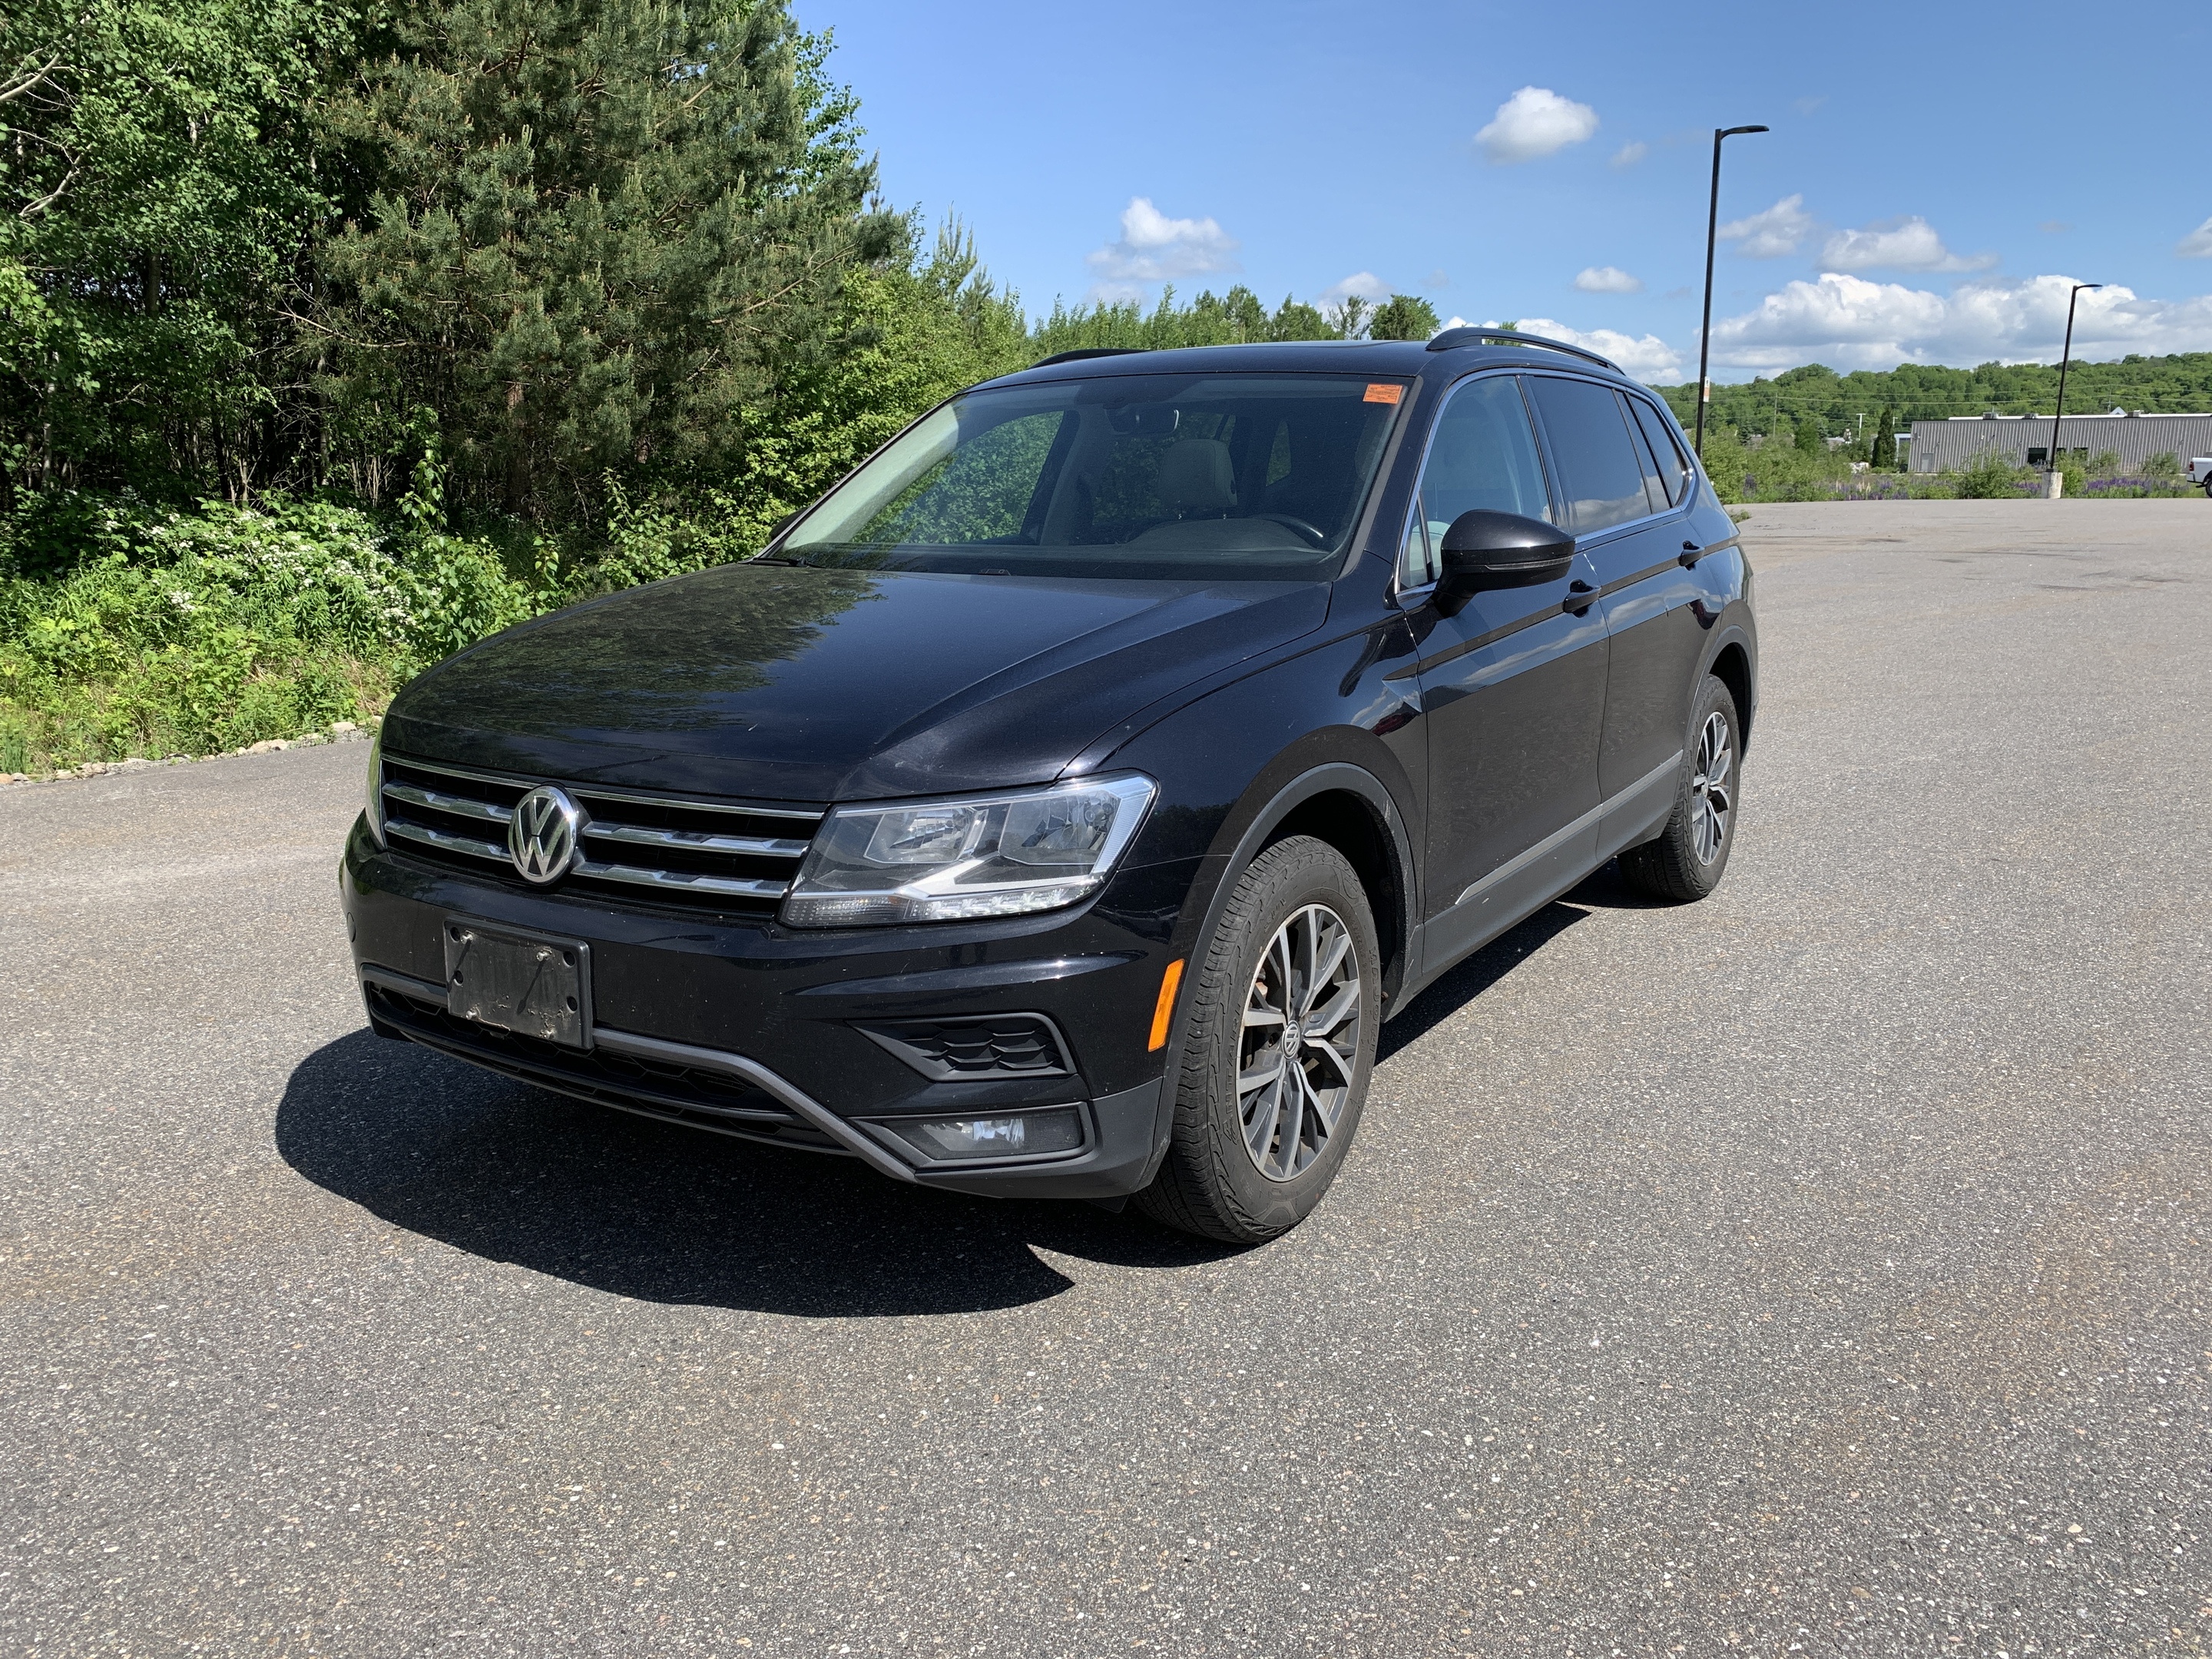 2018 Volkswagen Tiguan 4MOTION | 2.0L TURBO | AWD 